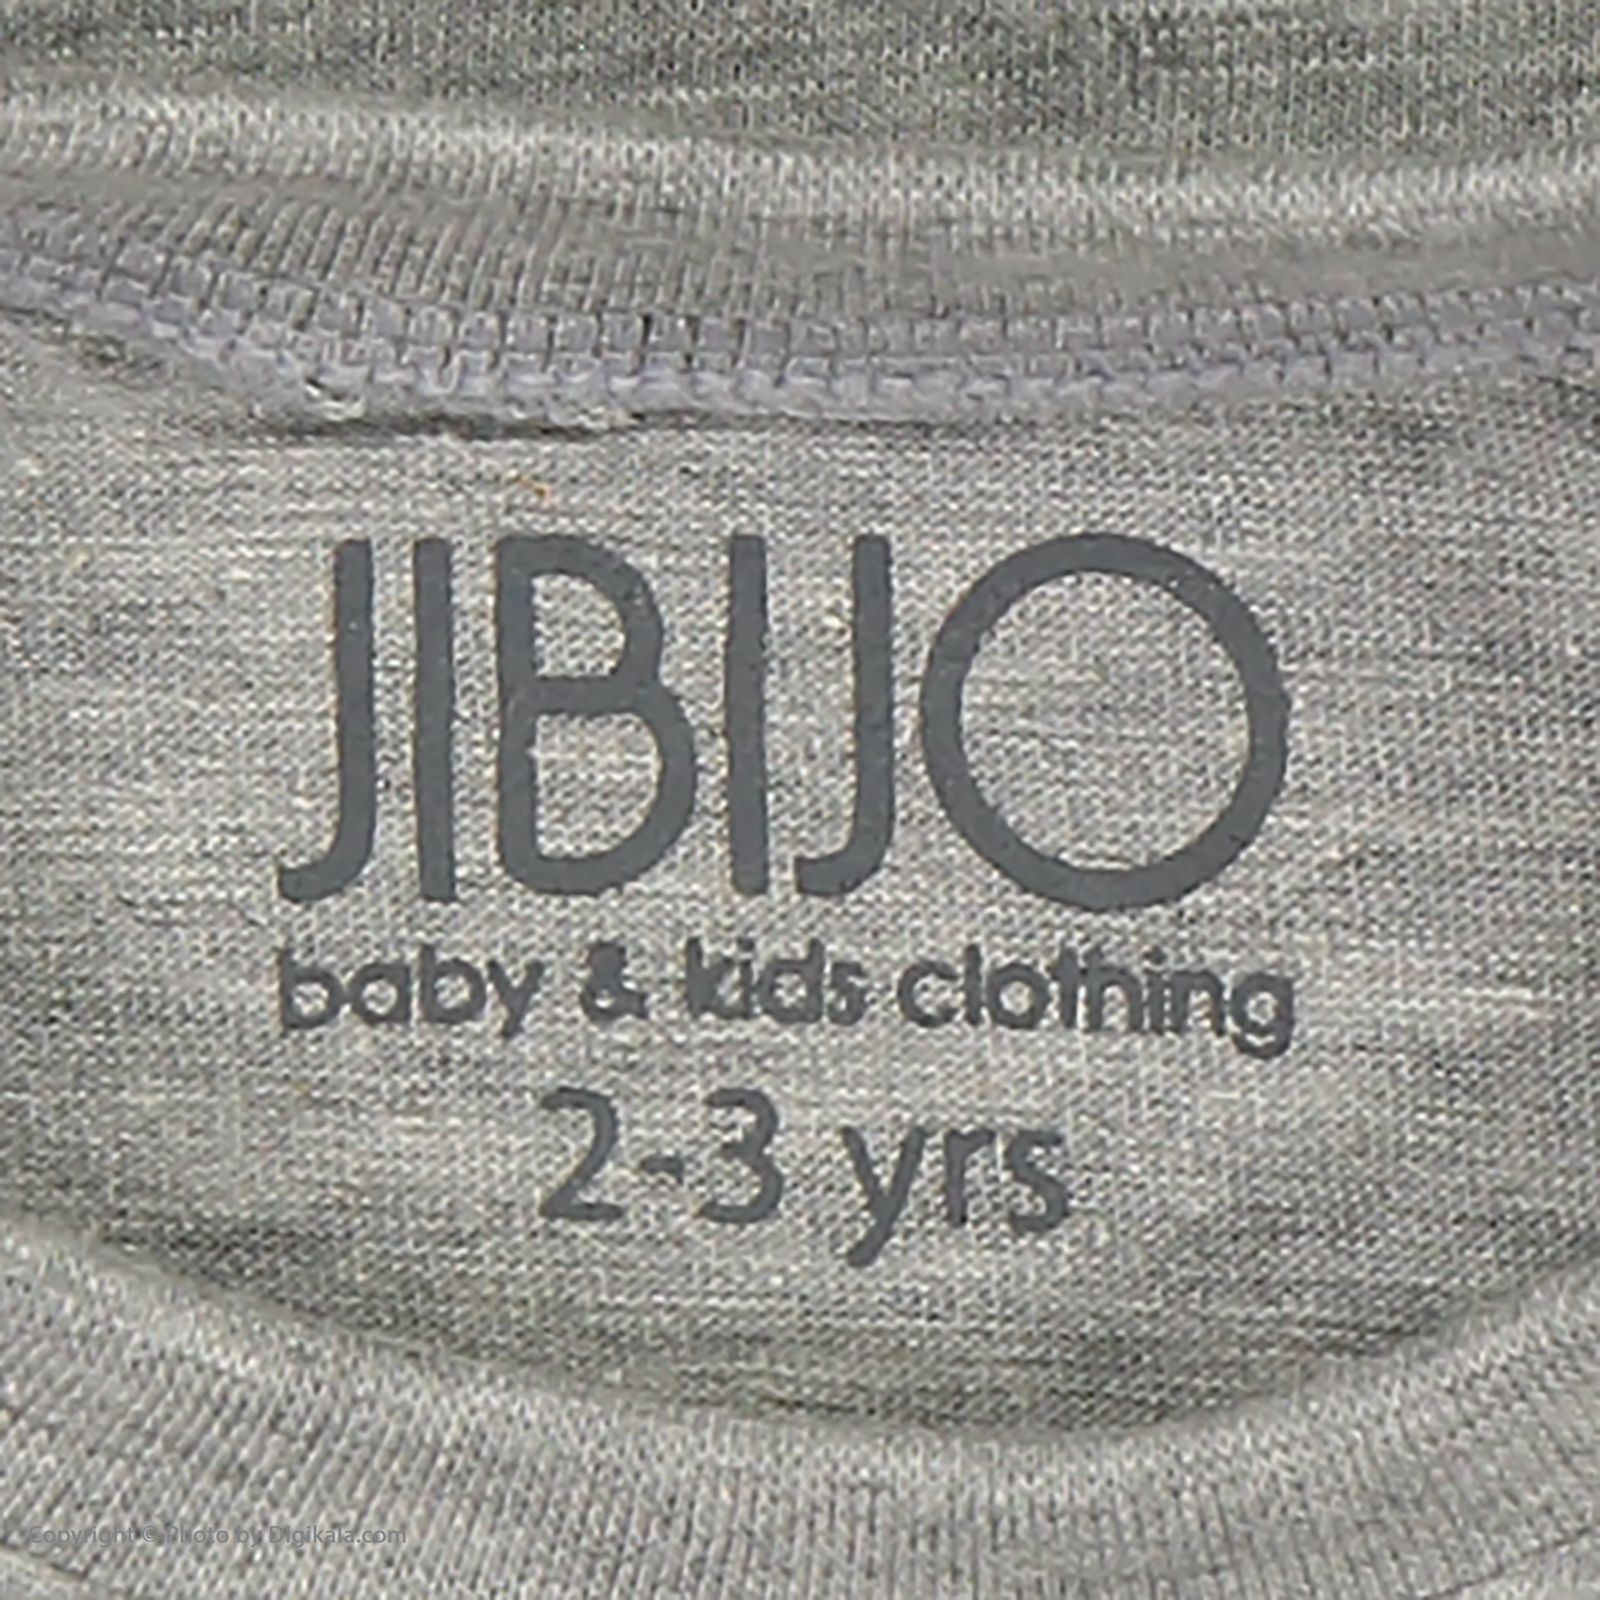 تی شرت پسرانه جیبیجو مدل 2081105-90